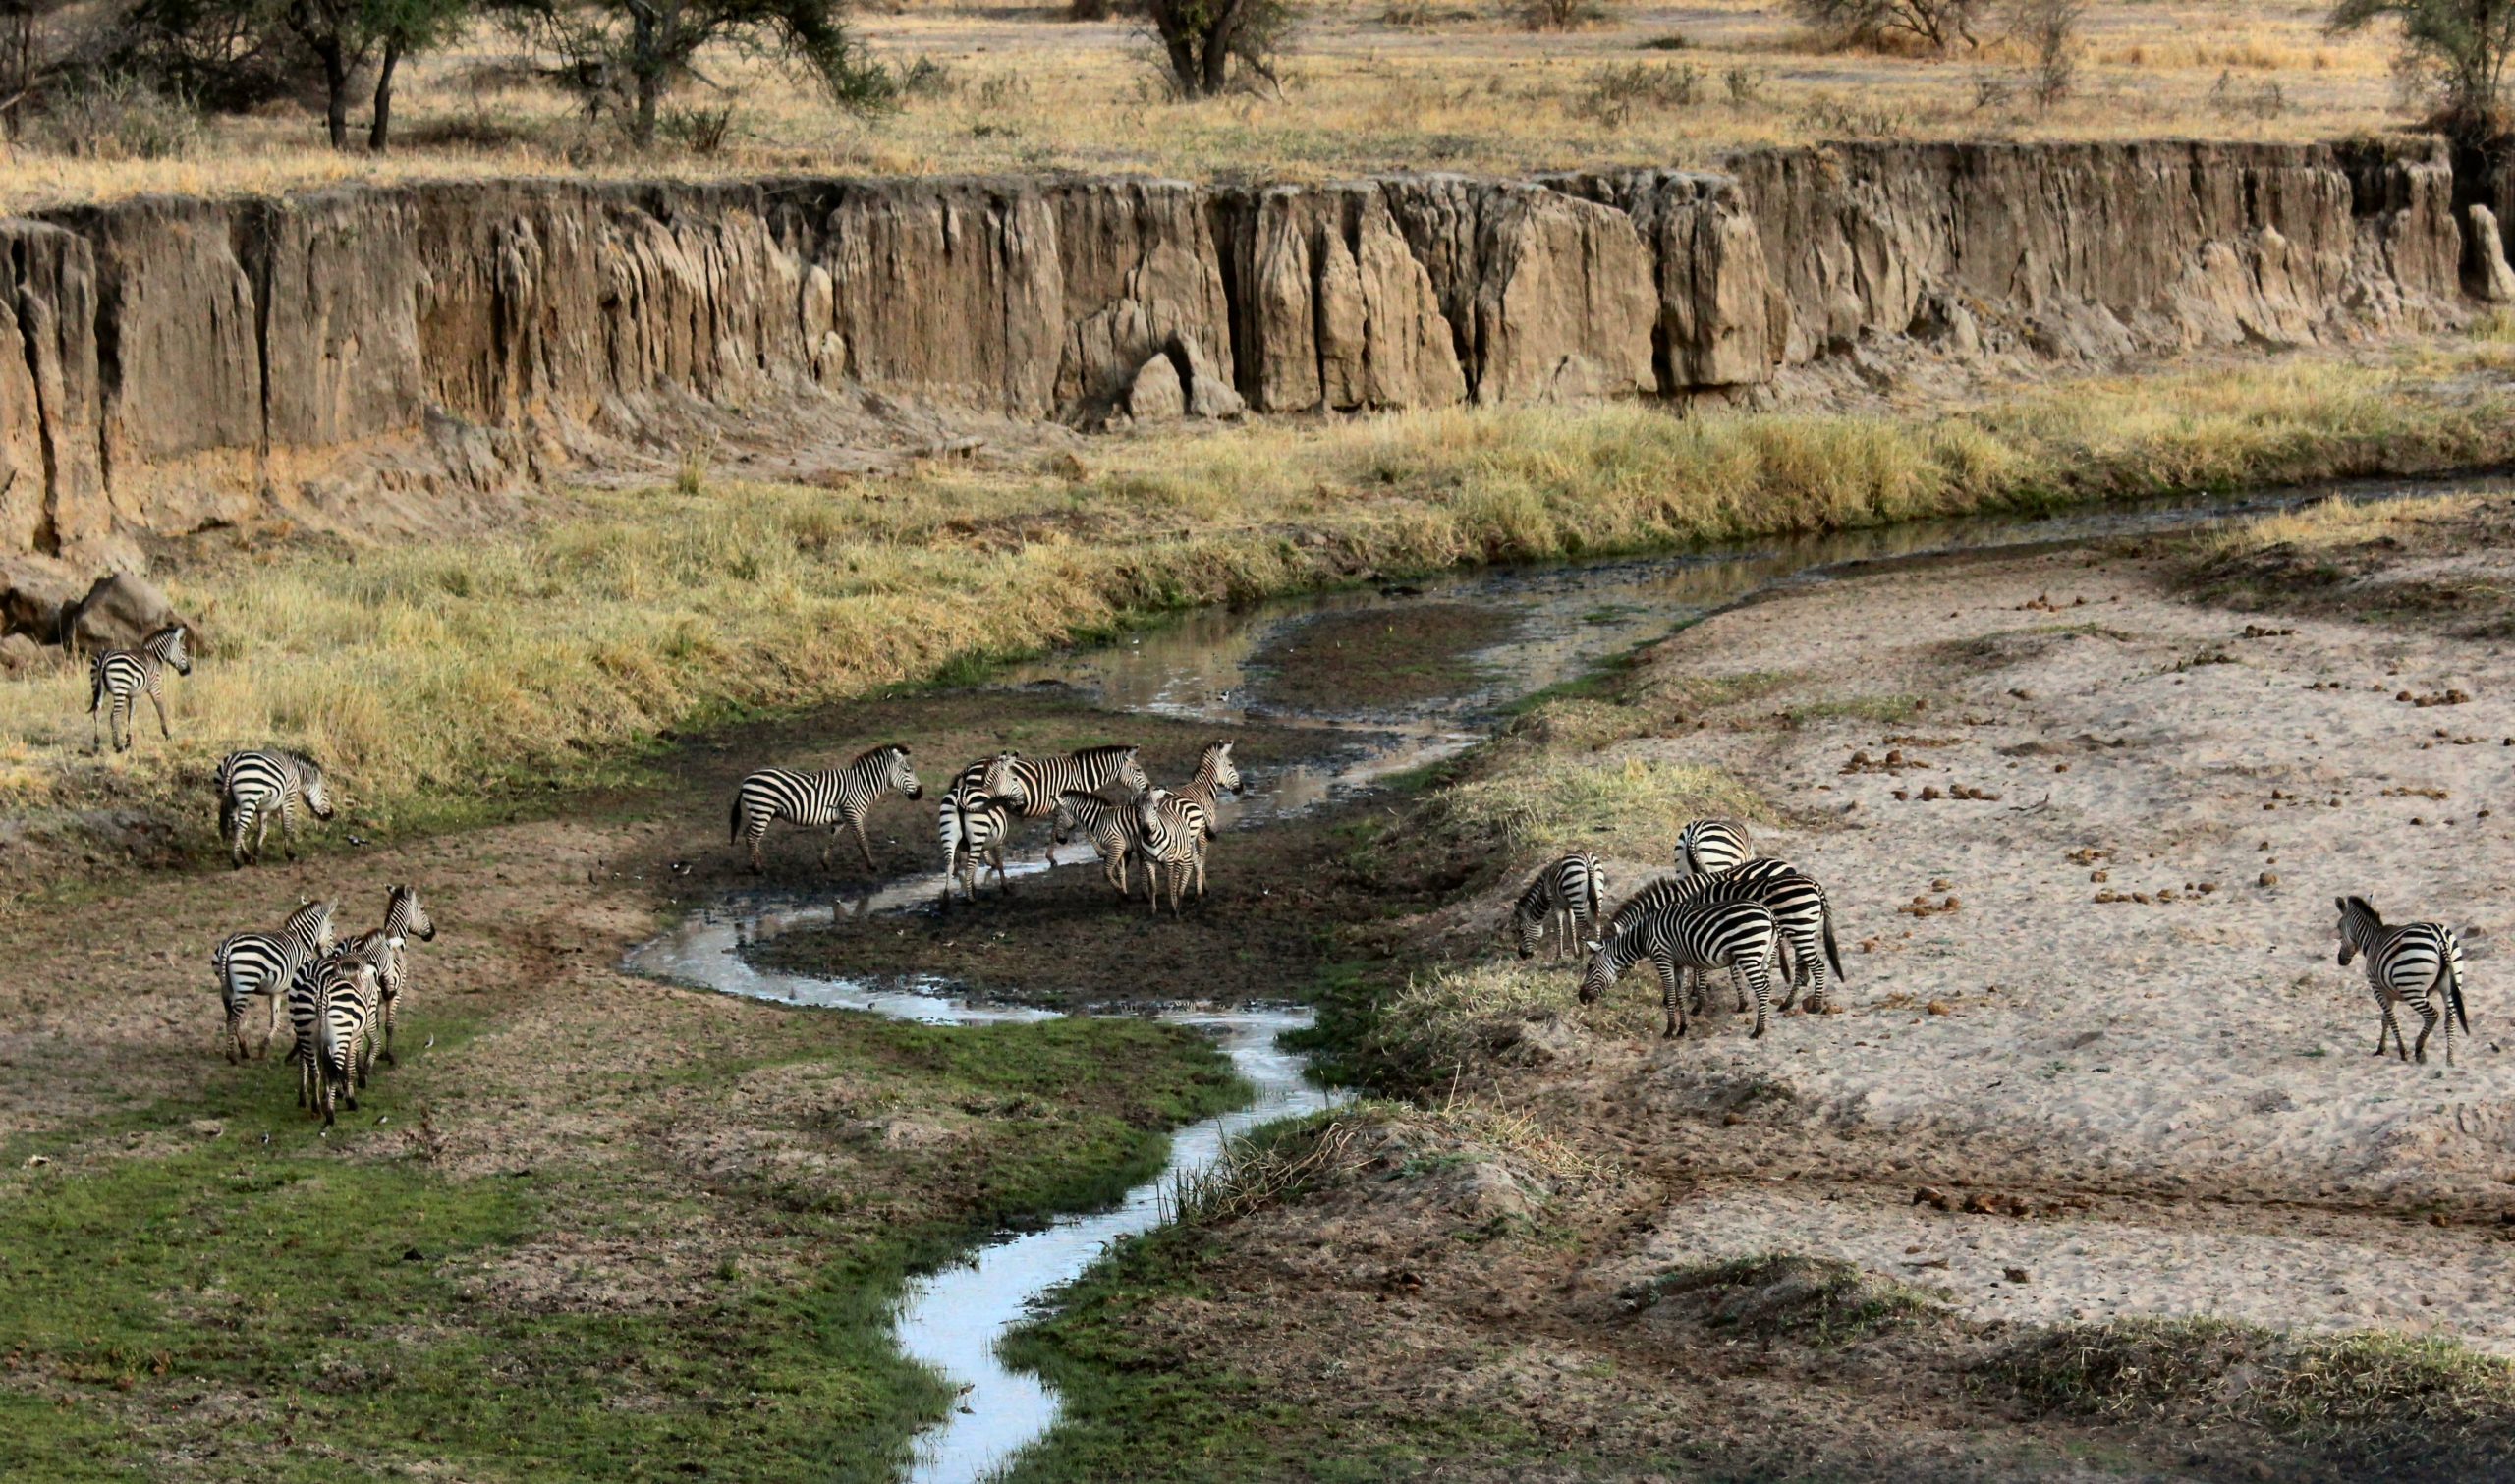 Zebras gather in a river bed in tanzania